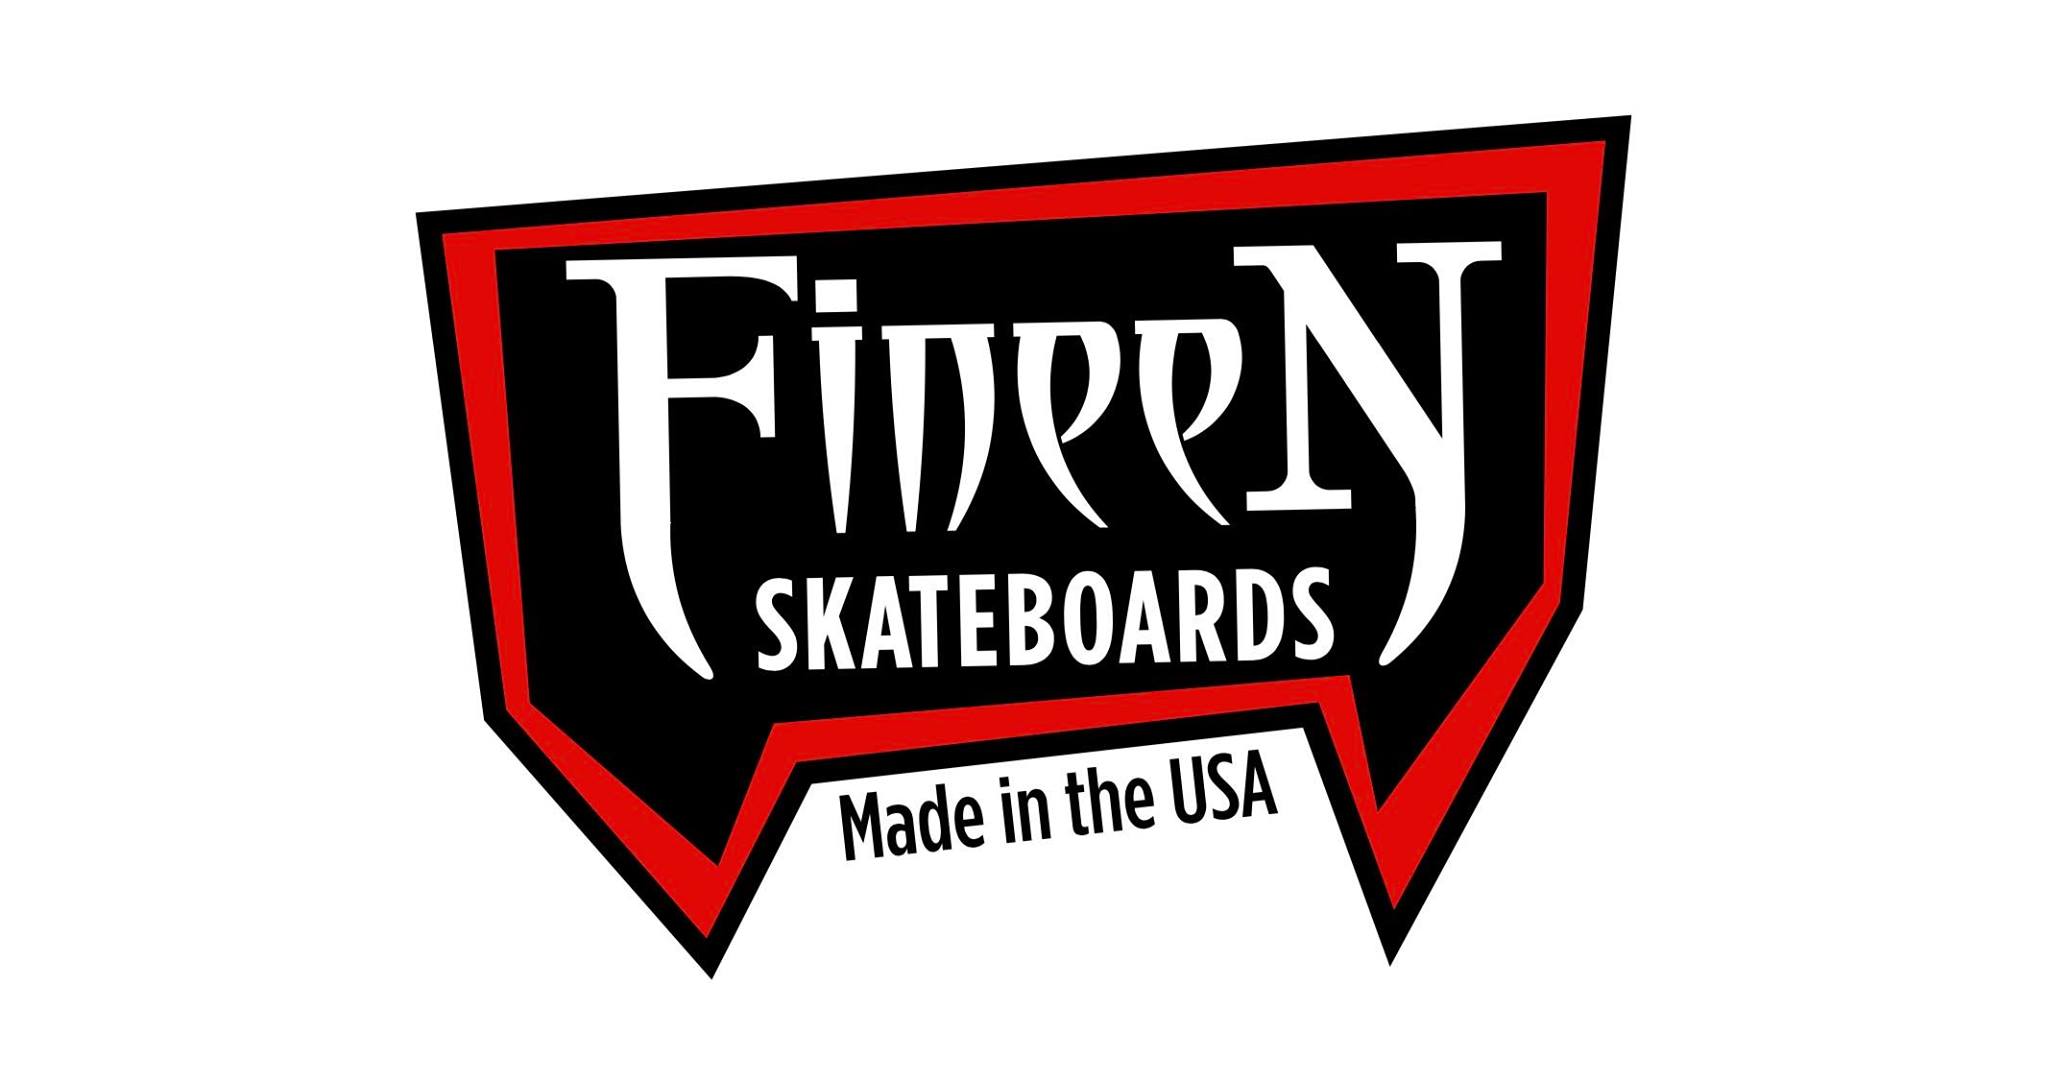 Fineen Skateboards - ผลิตในประเทศสหรัฐอเมริกา